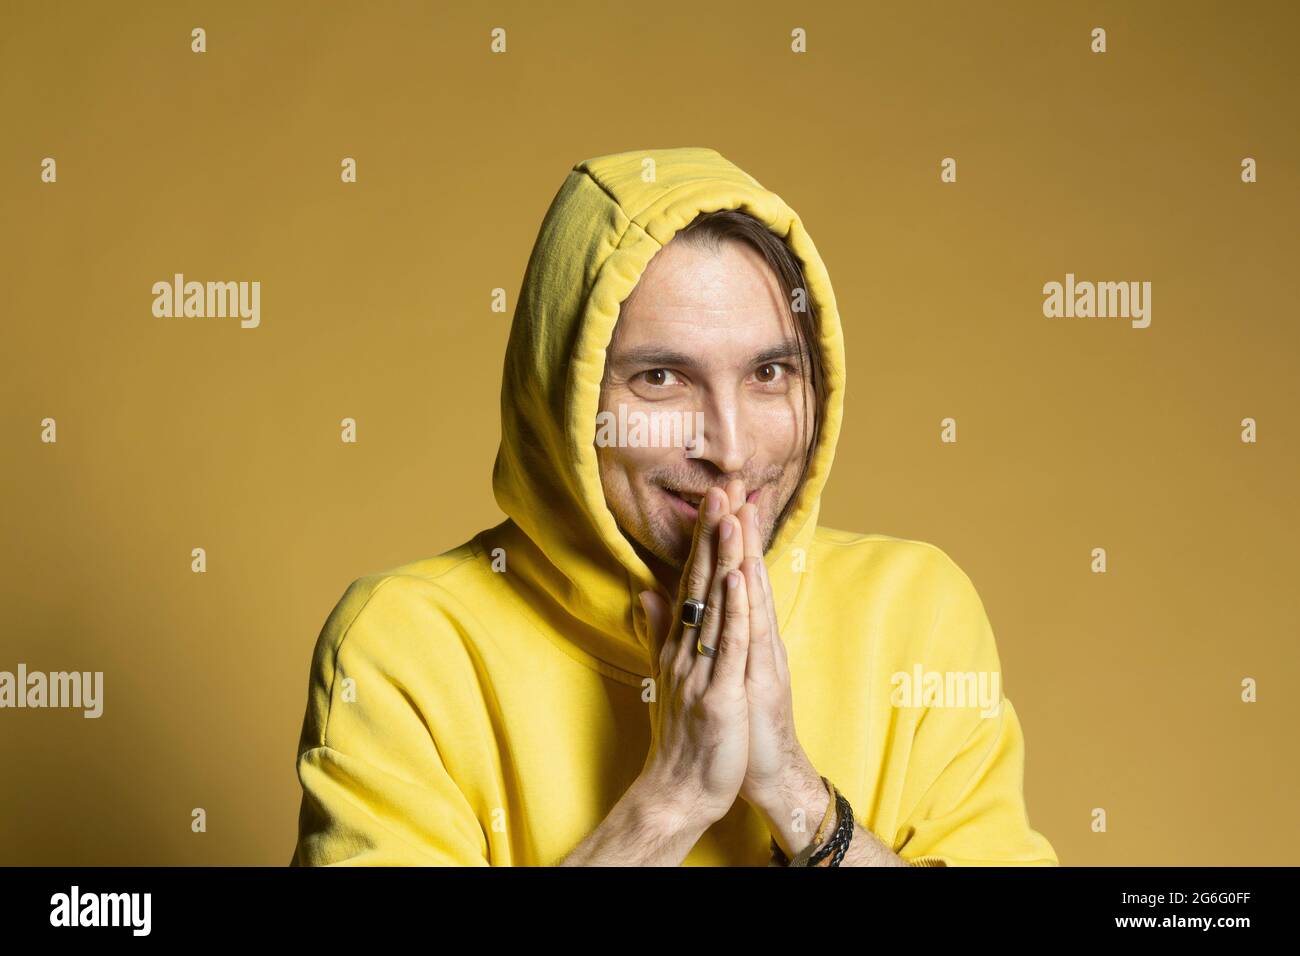 Portrait excited man in yellow hooded sweatshirt Stock Photo